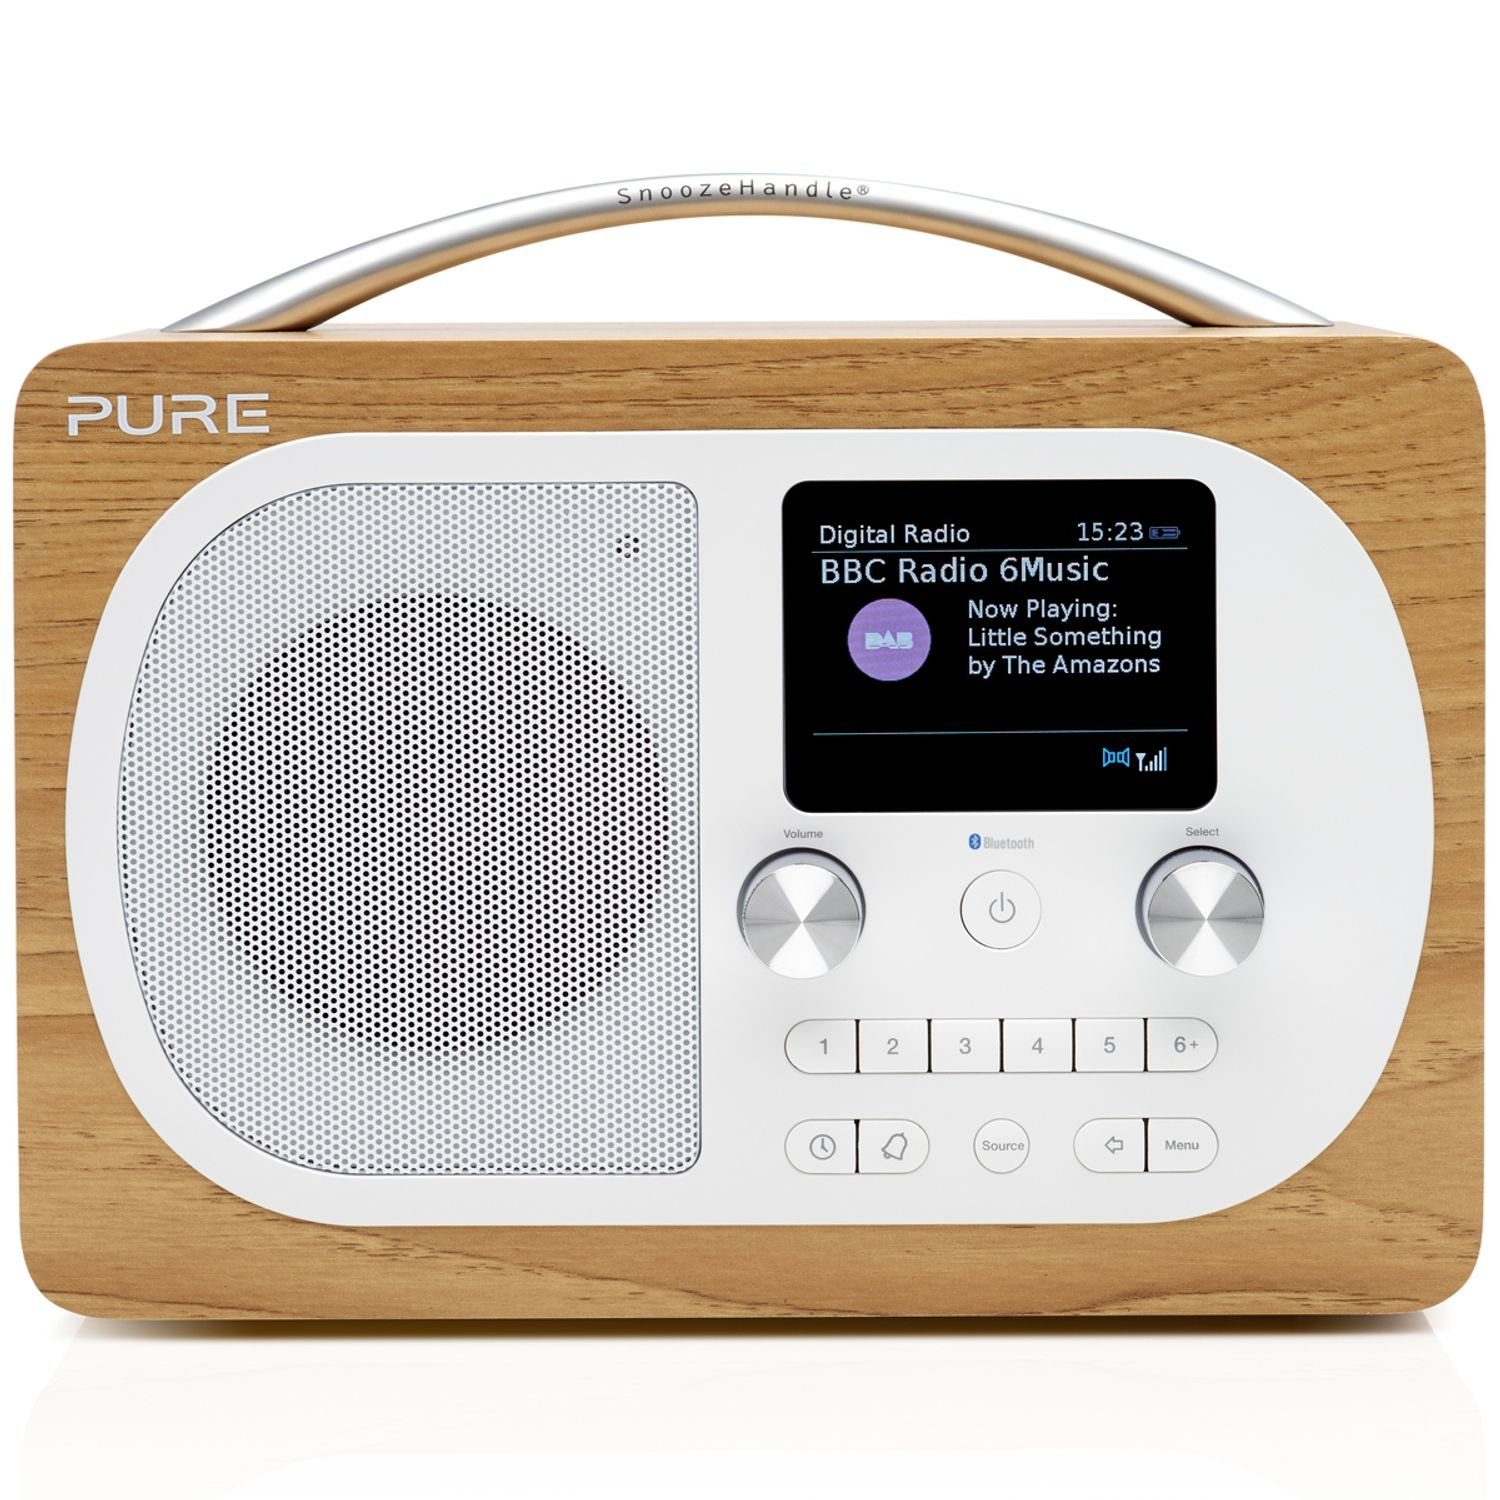 Bluetooth-Streaming H4 Evoke UKW-Küchenradio DAB+ Pure Digitalradio Oak EU/UK Digital- (DAB)